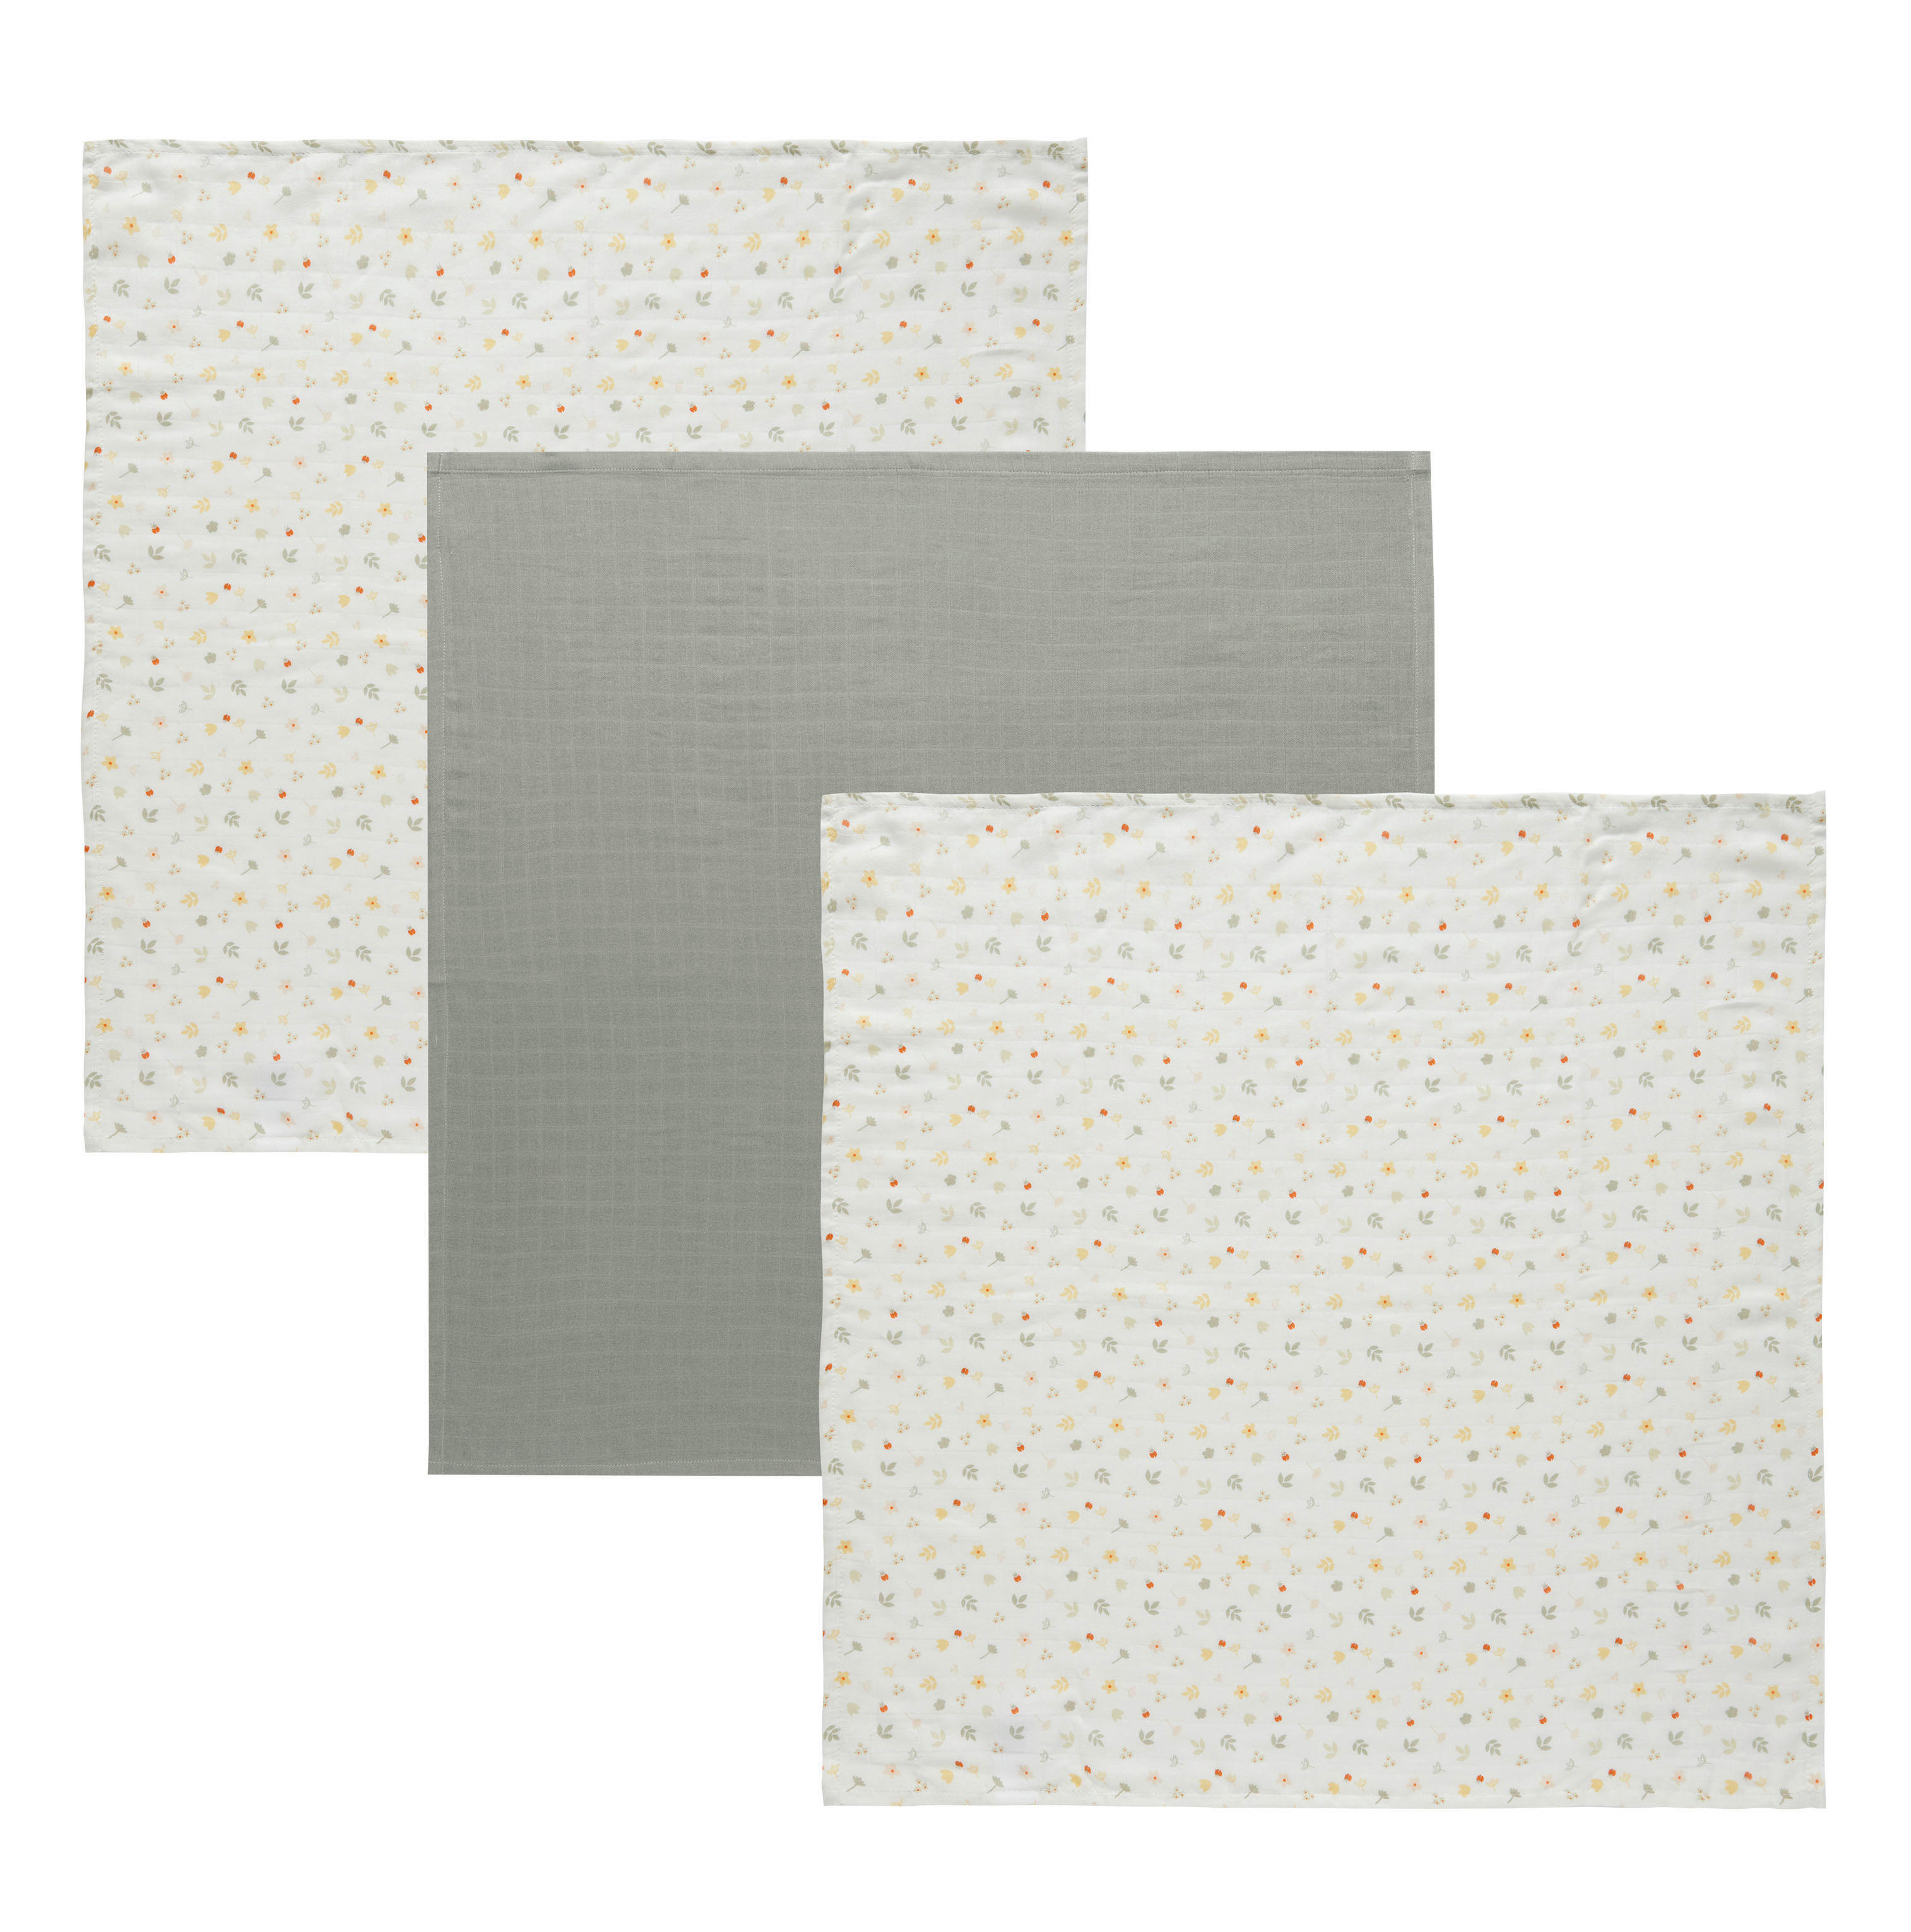 MULLWINDELN - Gelb/Weiß, Basics, Textil (70/70/0,3cm) - Bebe Jou